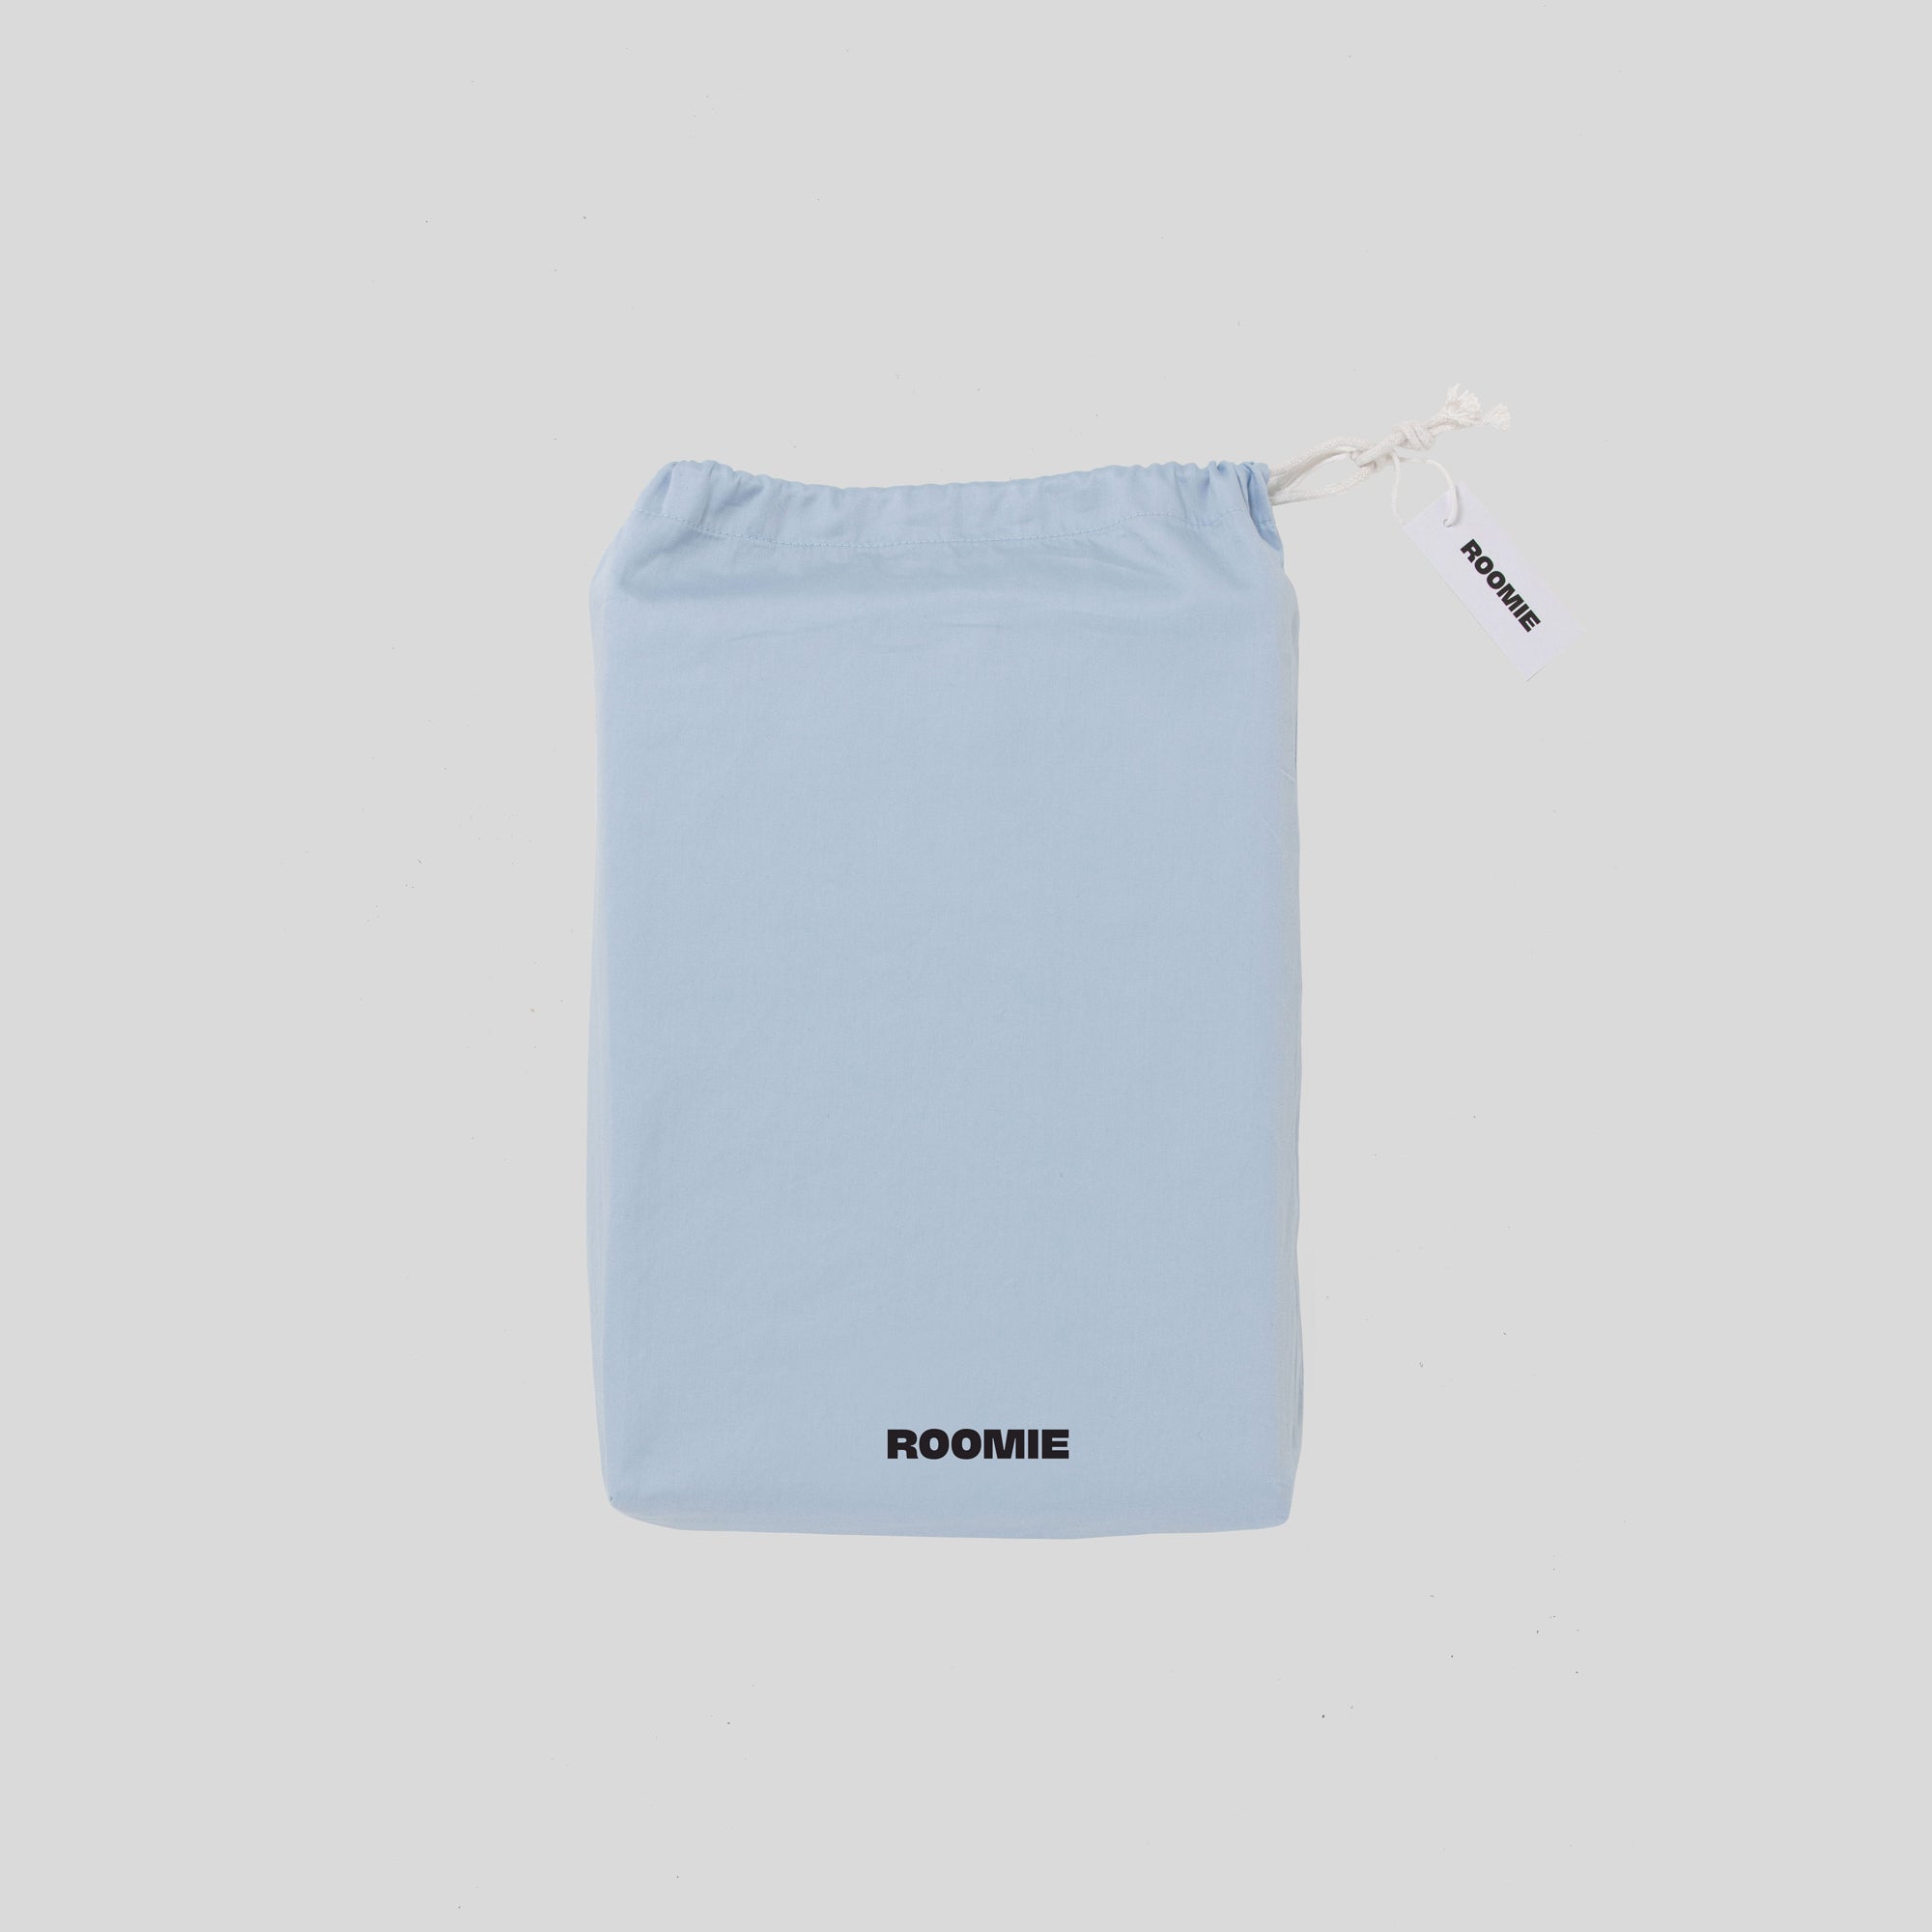 Roomie blue organic cotton bag